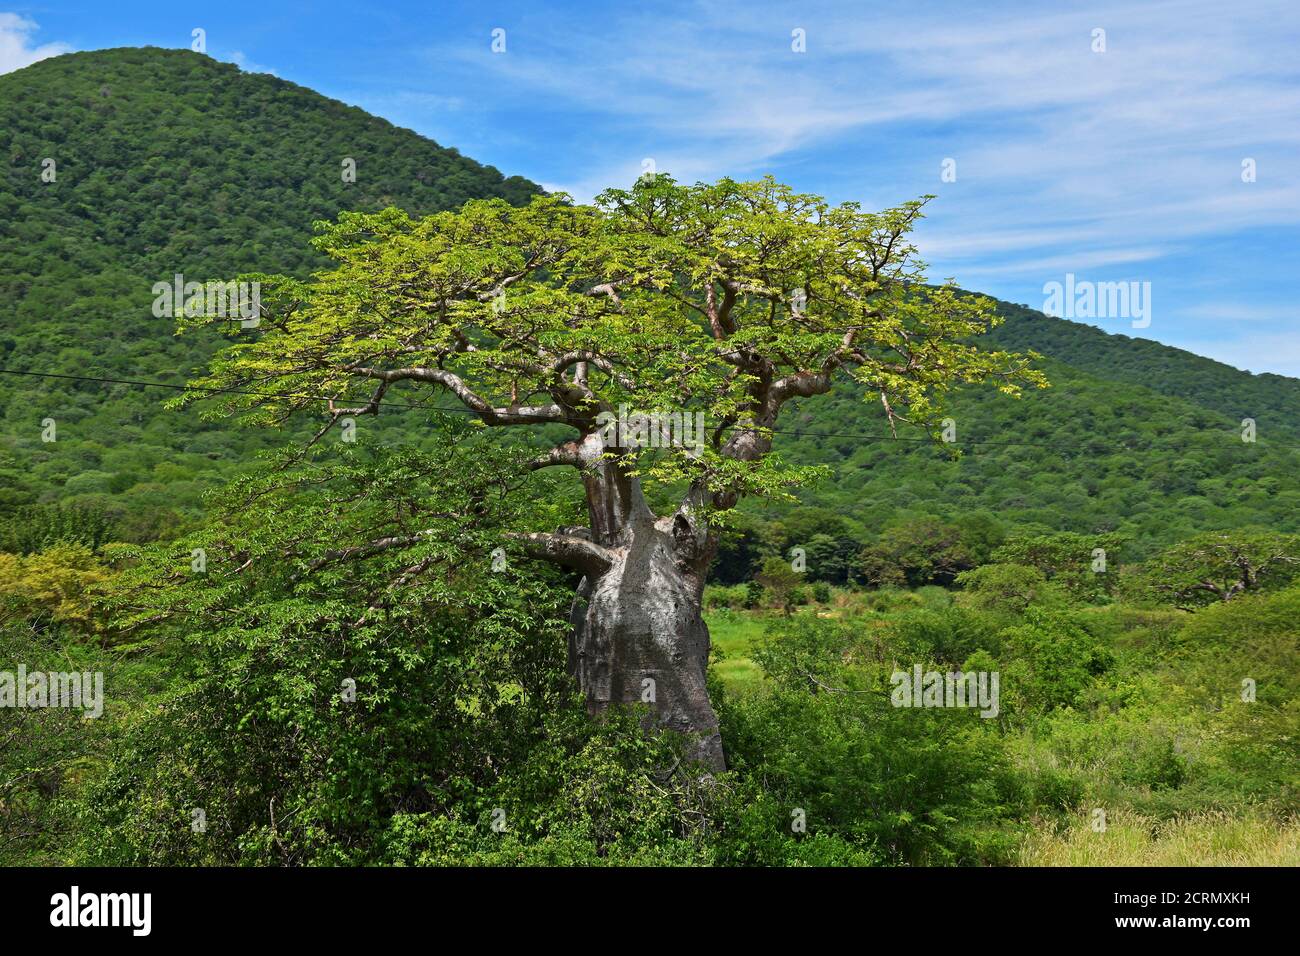 Afrikanischer Baobab Baum in Tansania Stockfoto